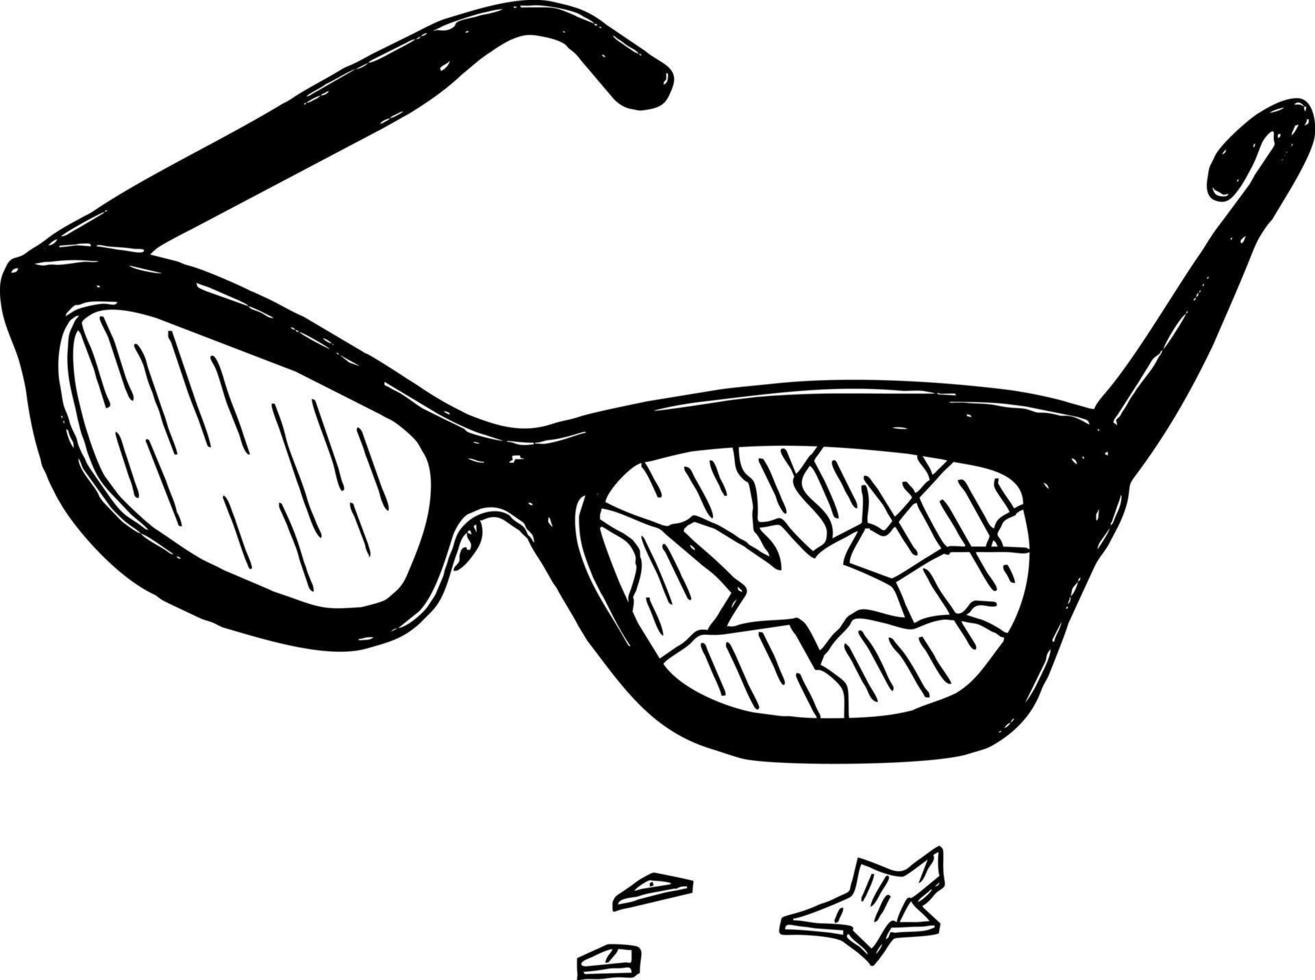 trasiga glasögon. vektor skiss illustration. gamla pausglasögon. glasögon med trasiga glasögon, grafisk ikon